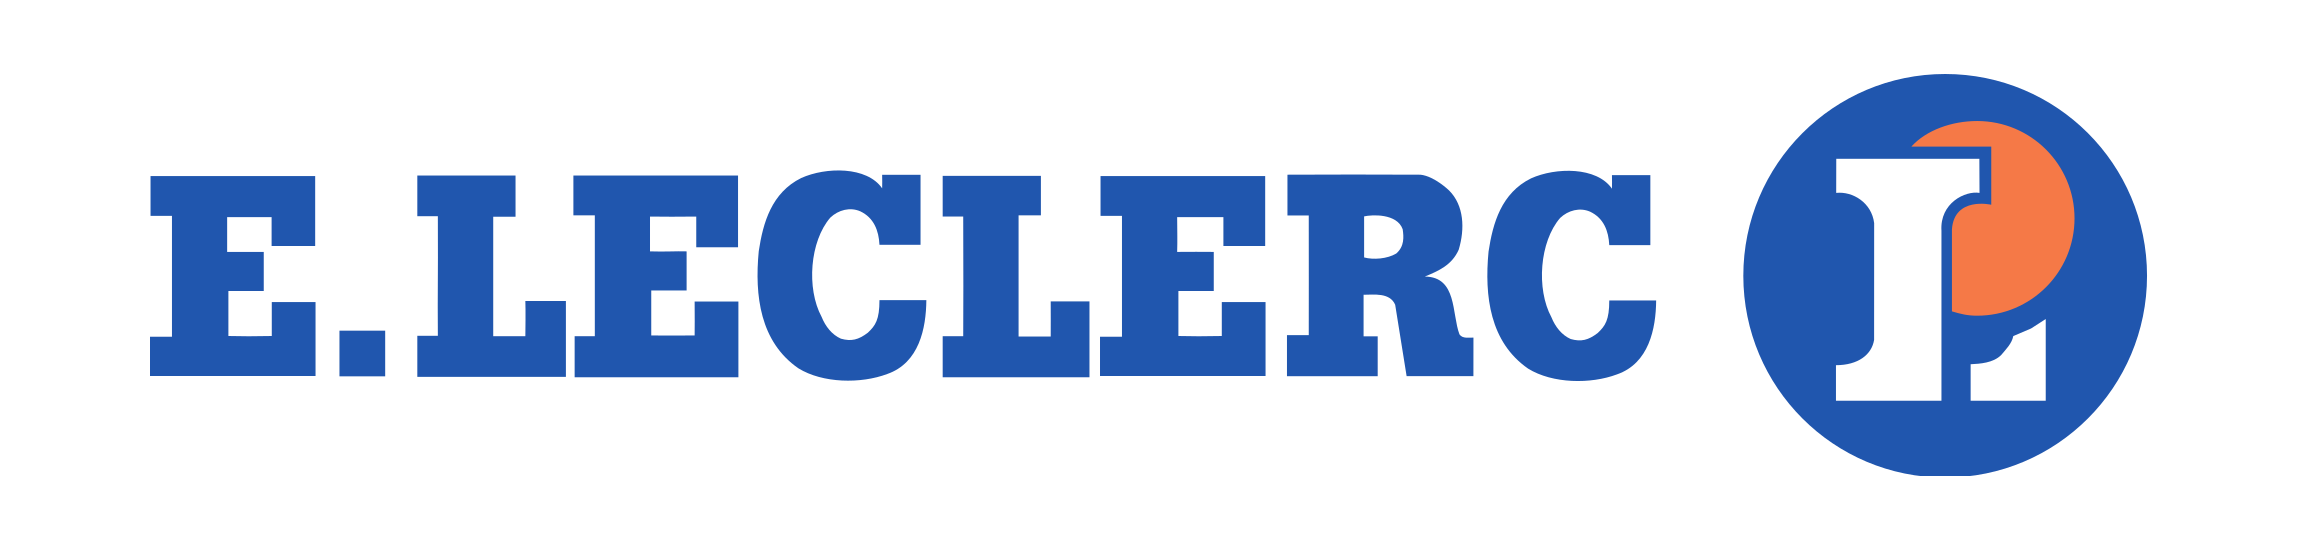 Leclerc-logo.png